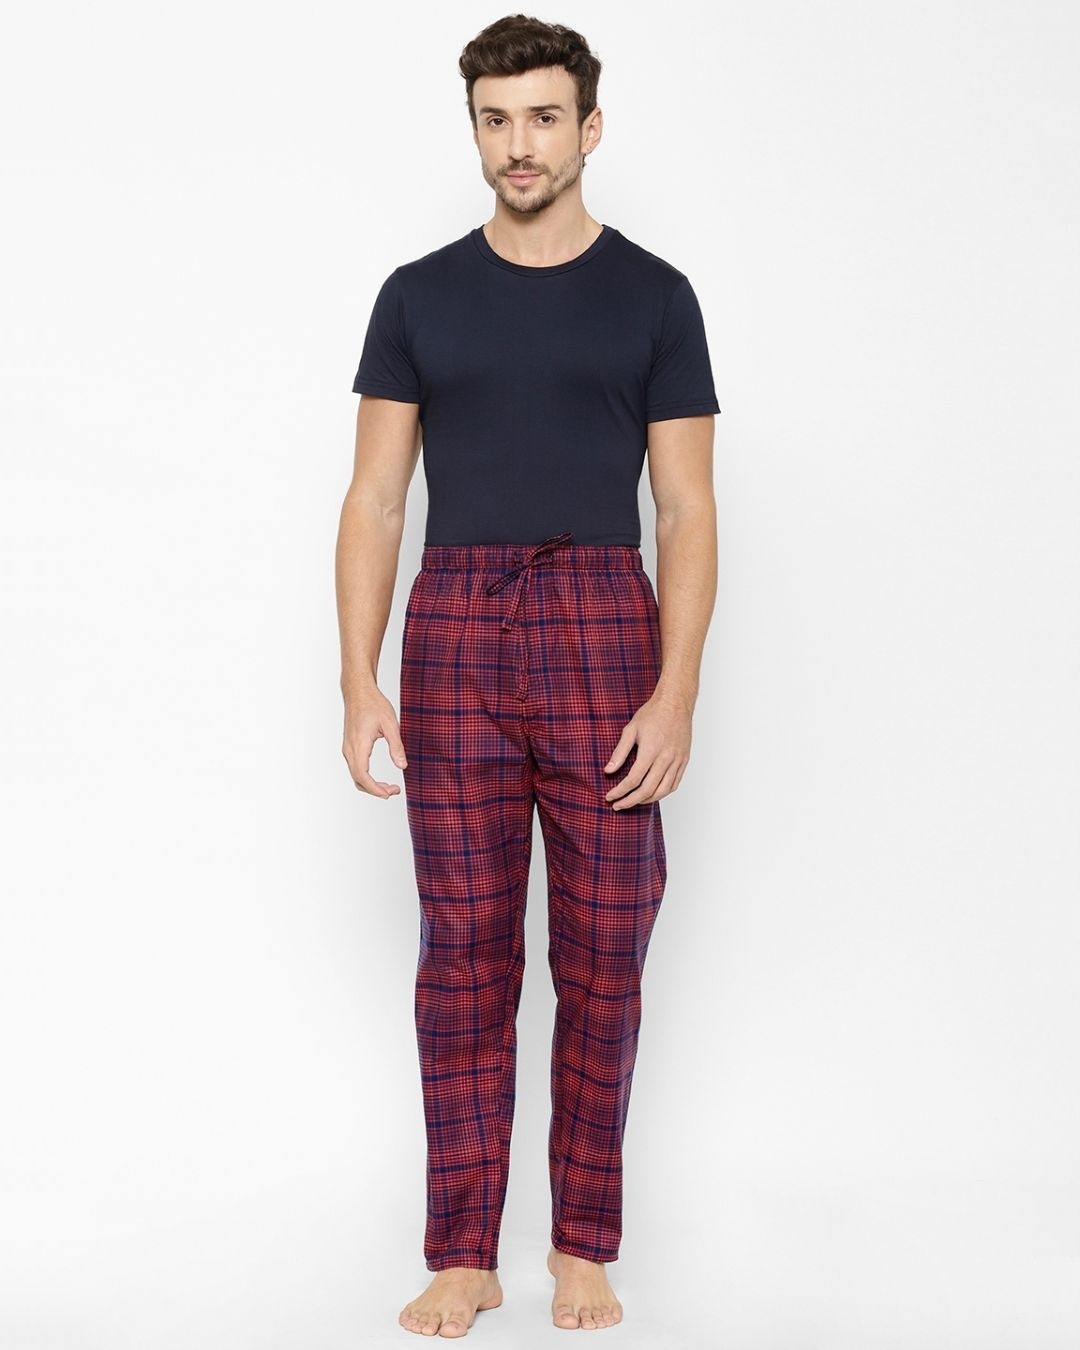 Shop Men's Blue Super Combed Cotton Checkered Pyjama (Pack of 2)